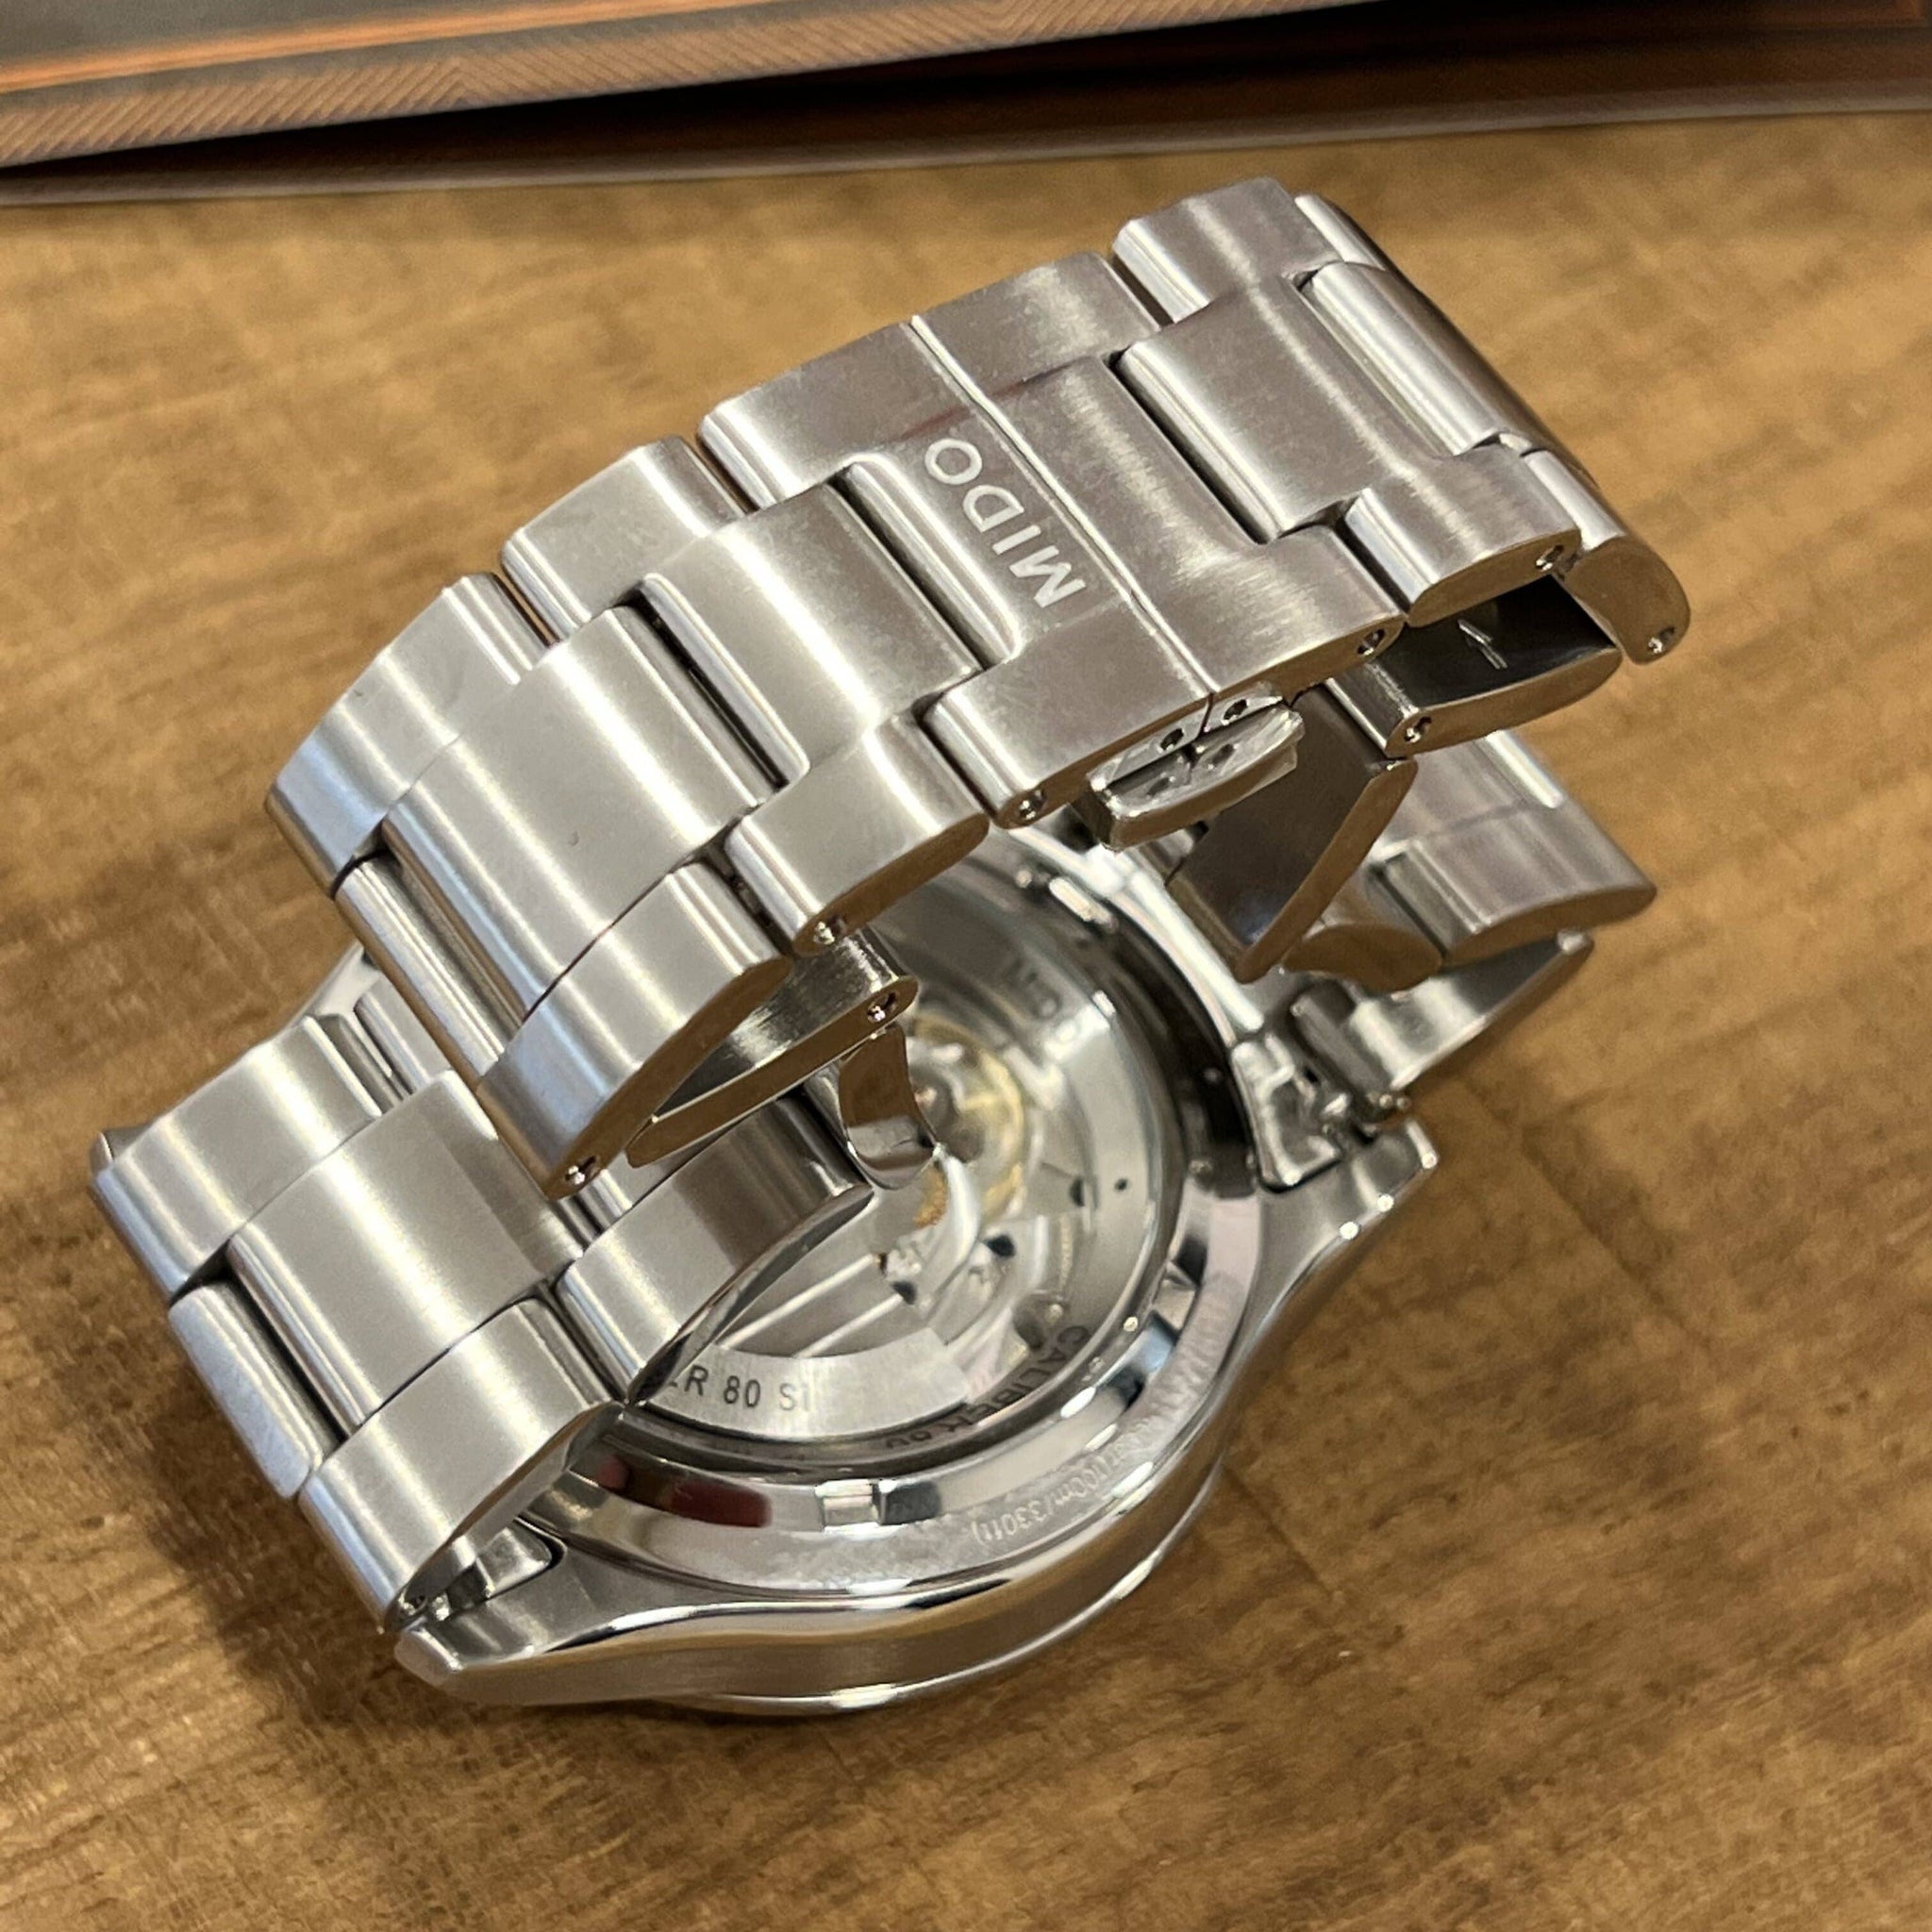 Mido - Multifort chronometer